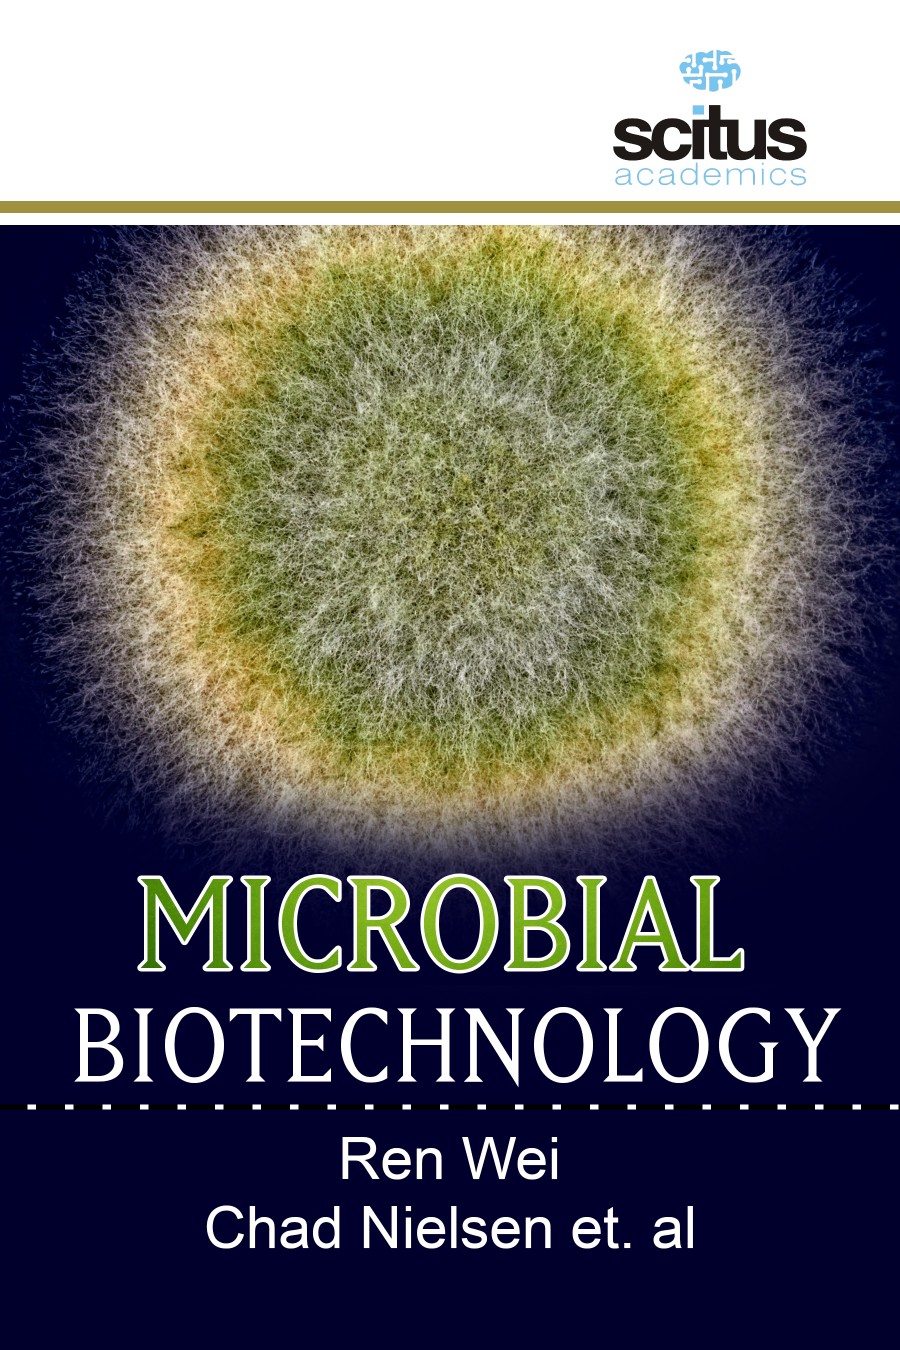 Microbial Biotechnology Scitus Academics